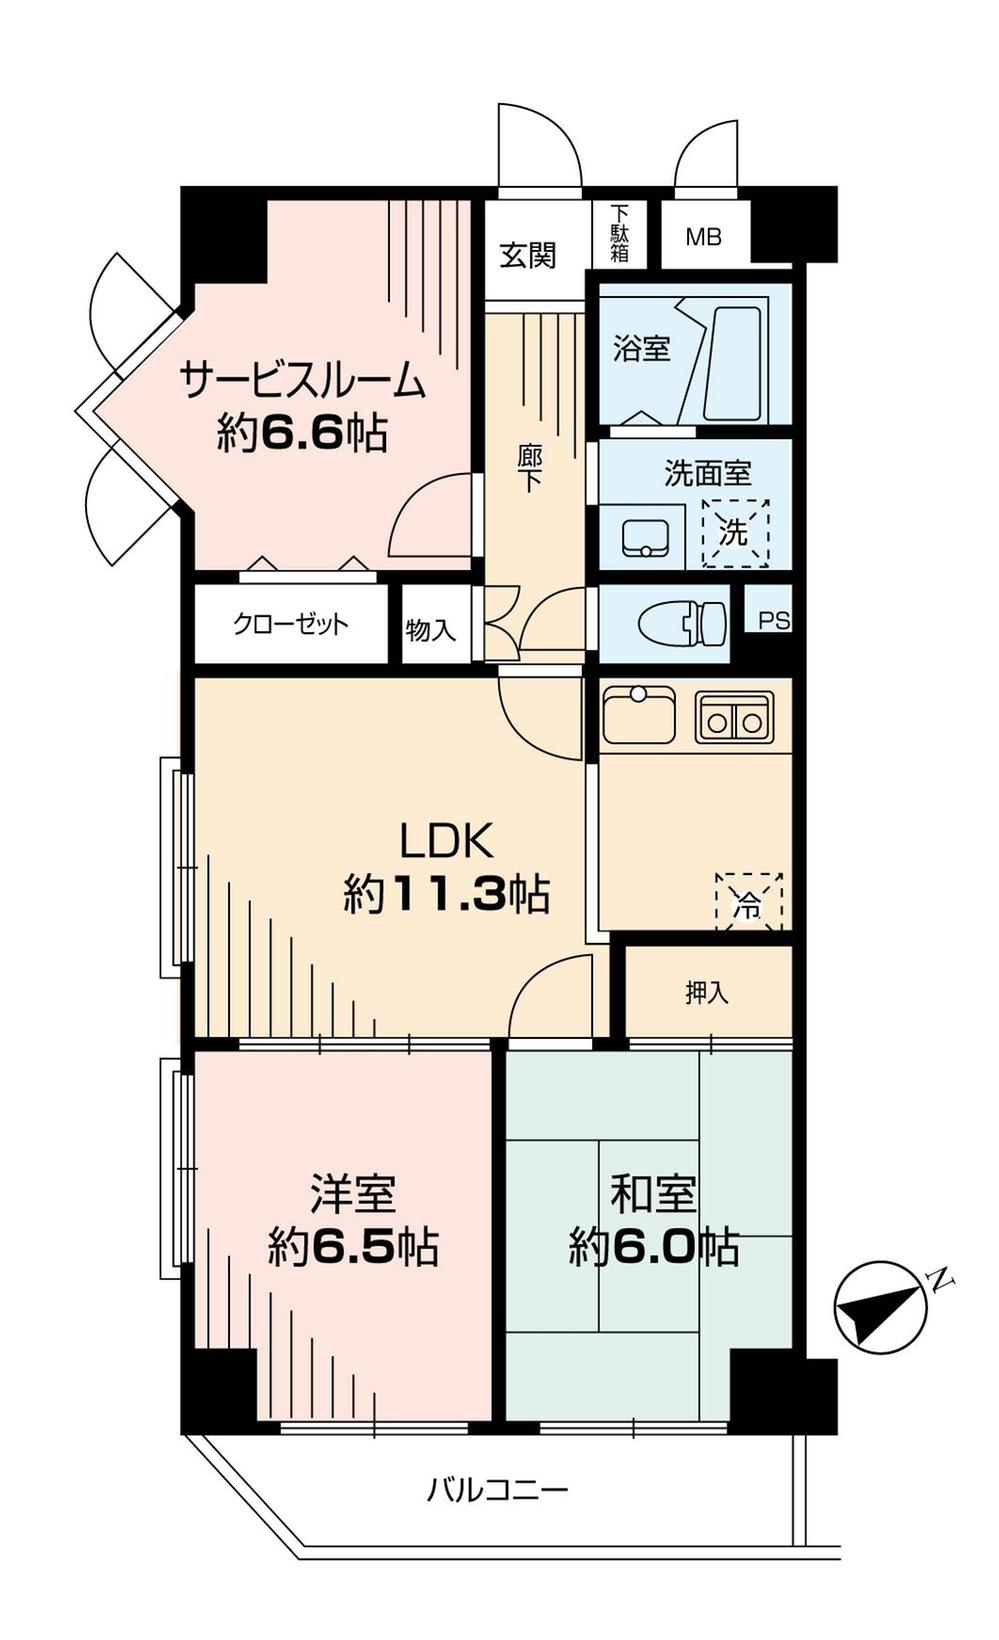 Floor plan. 2LDK + S (storeroom), Price 17,900,000 yen, Occupied area 66.54 sq m , Balcony area 6.06 sq m